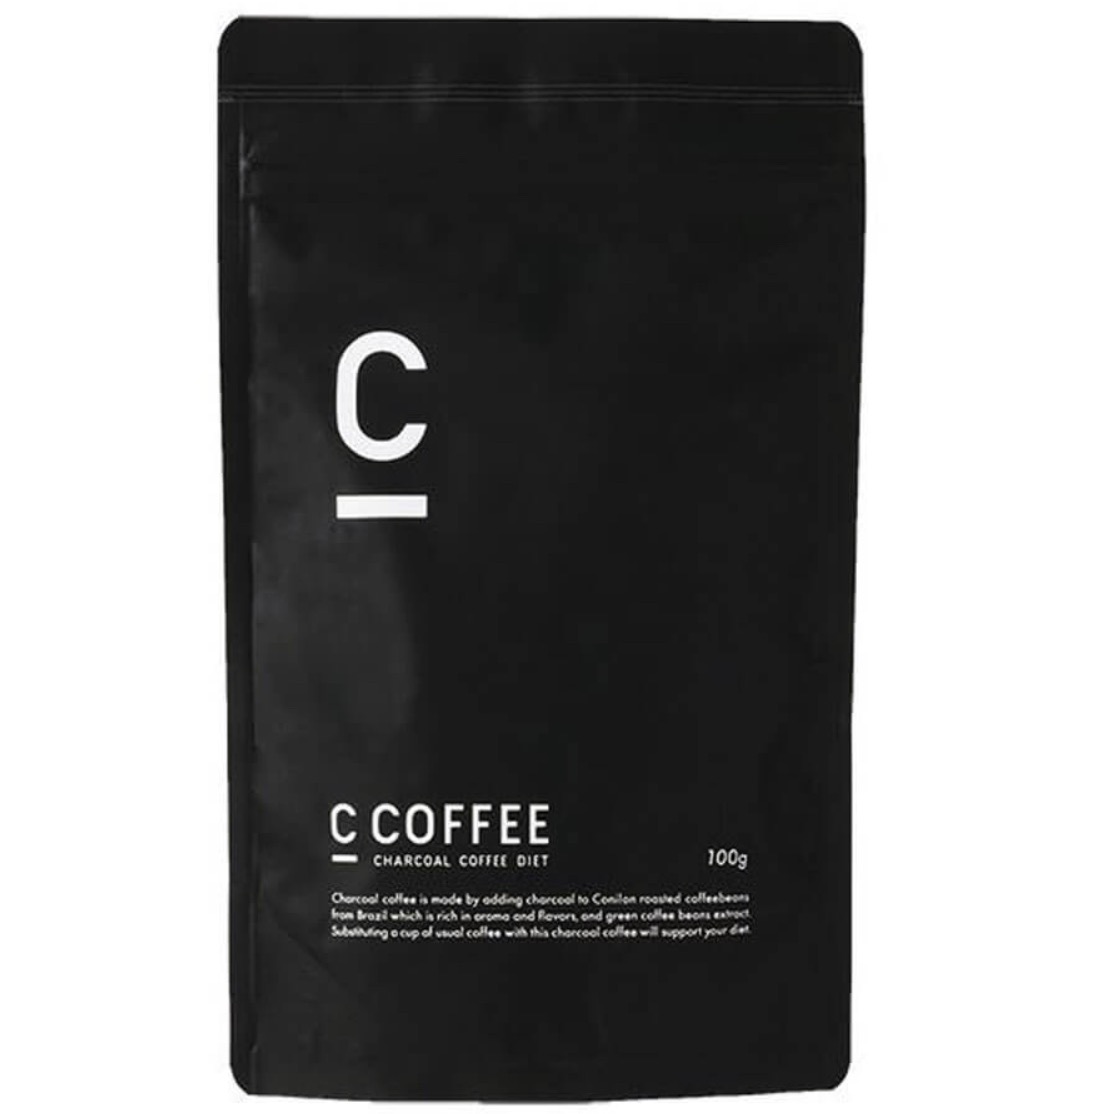 C COFFEE「CHARCOAL COFFEE DIET」